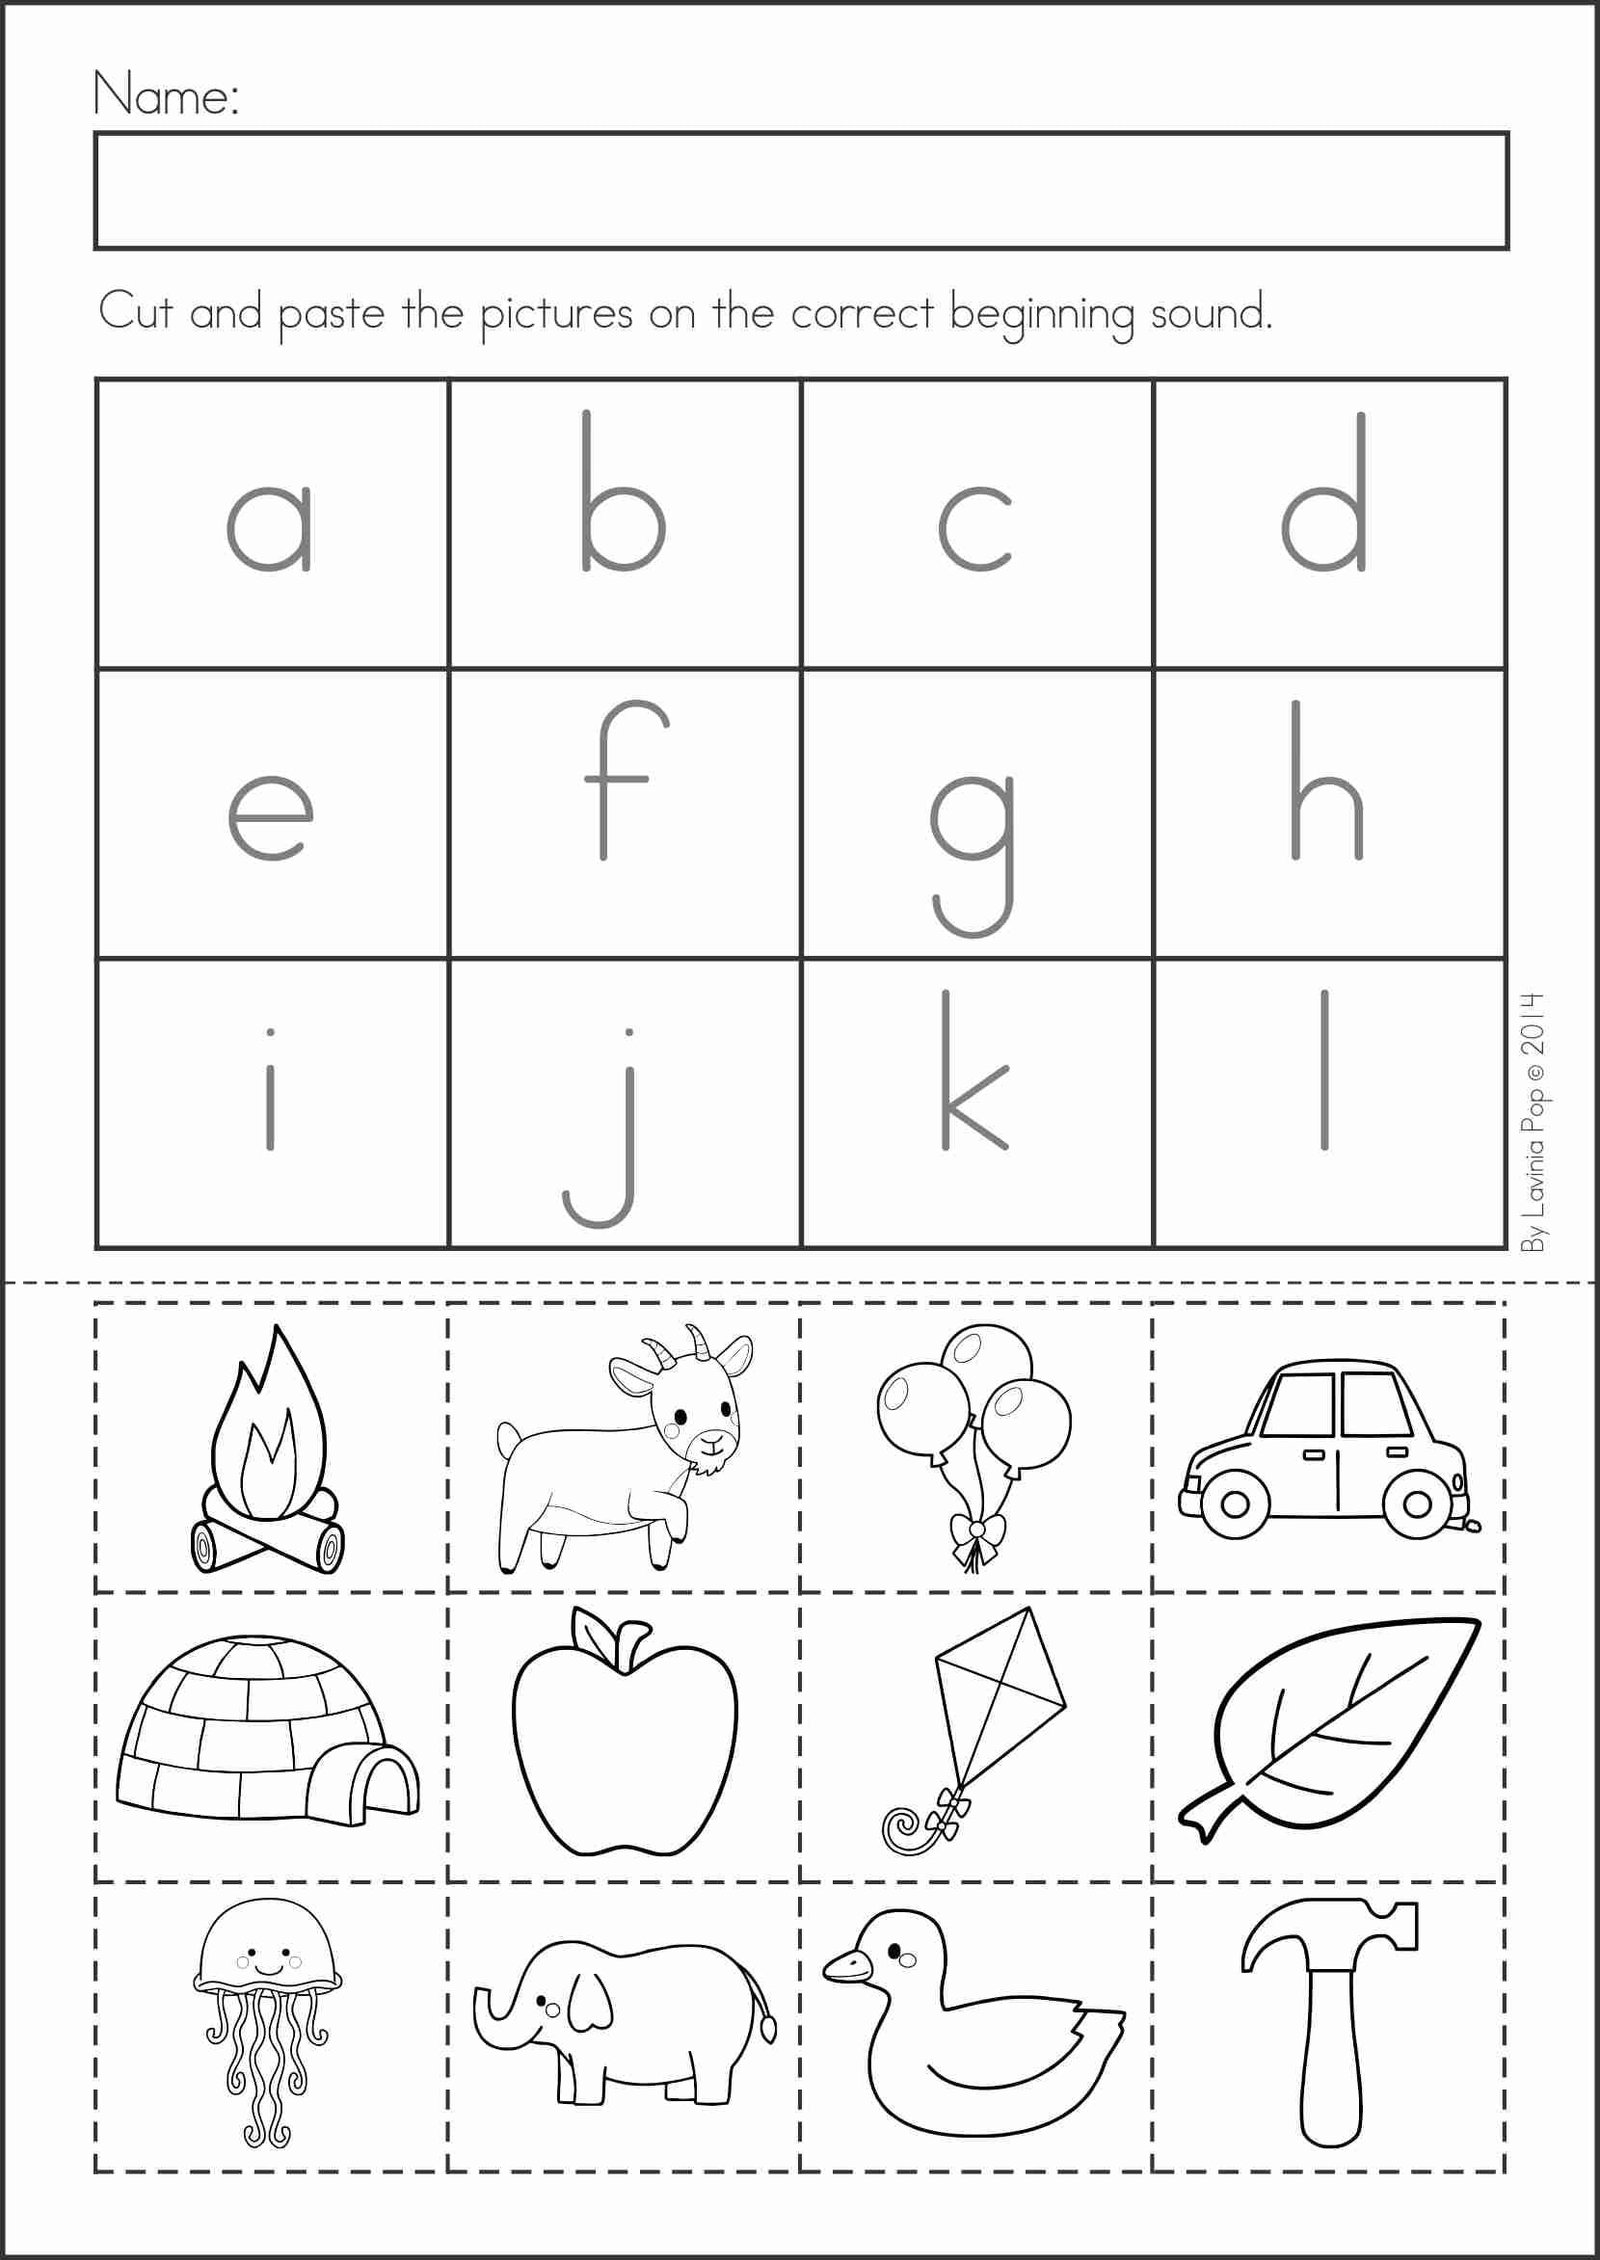 cut-and-paste-activities-for-preschoolers-worksheets-worksheetscity